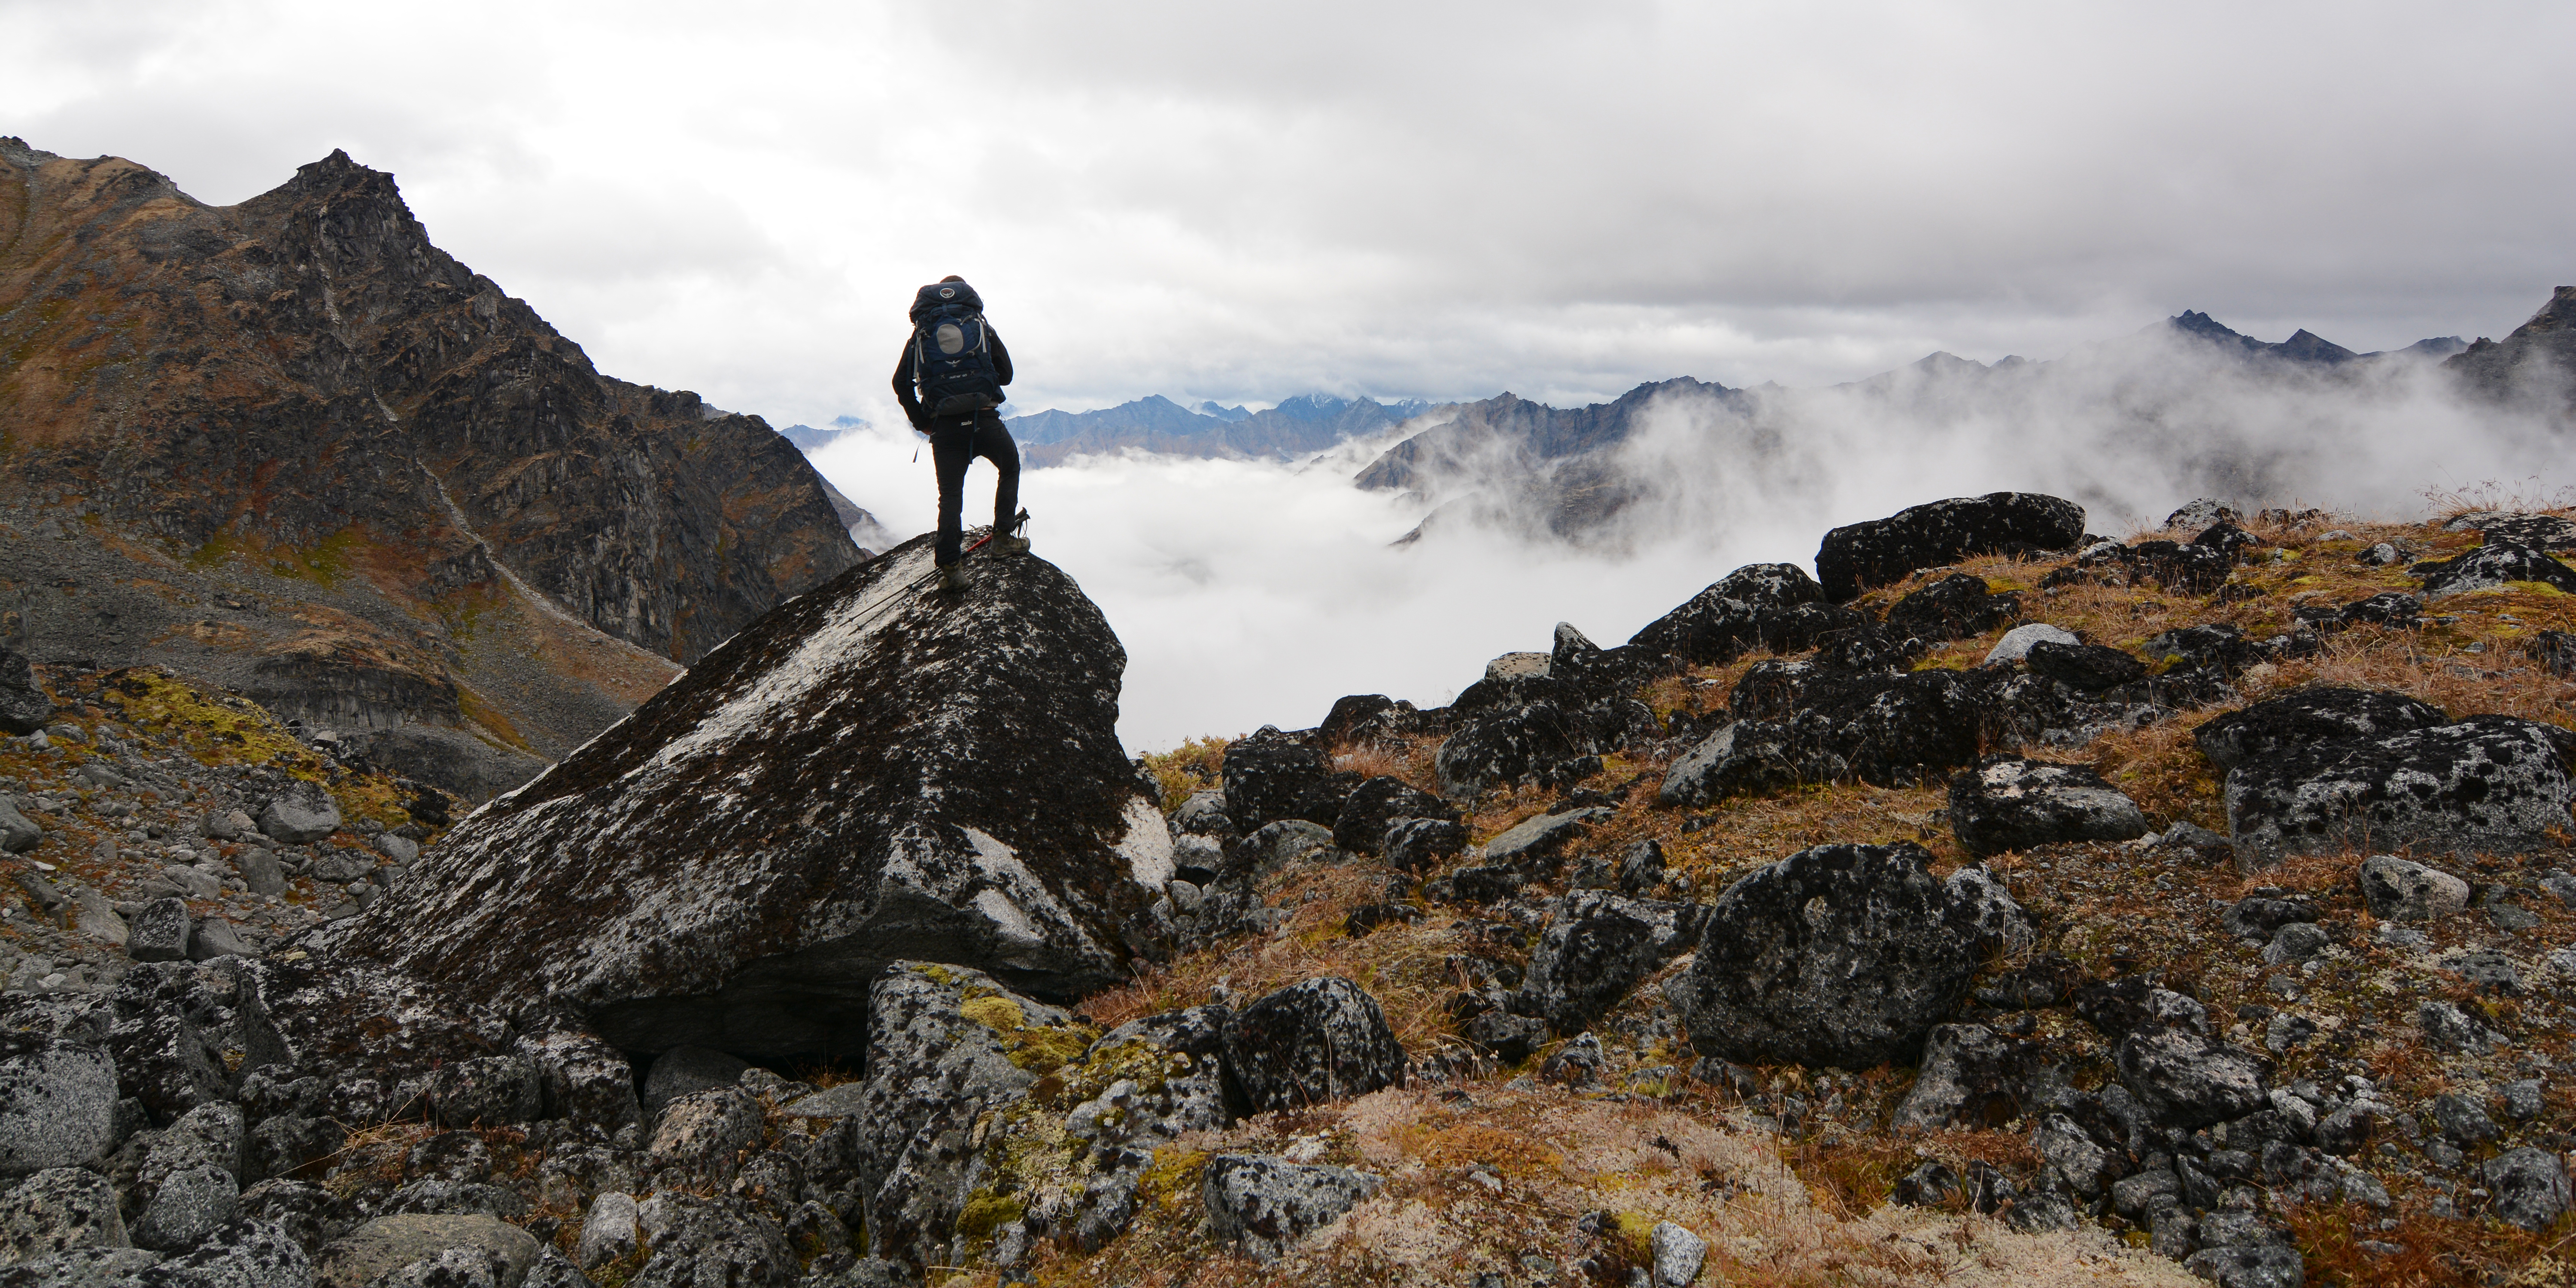 File:Hiking in the Talkeetna Mountains of Alaska.JPG - Wikimedia Commons